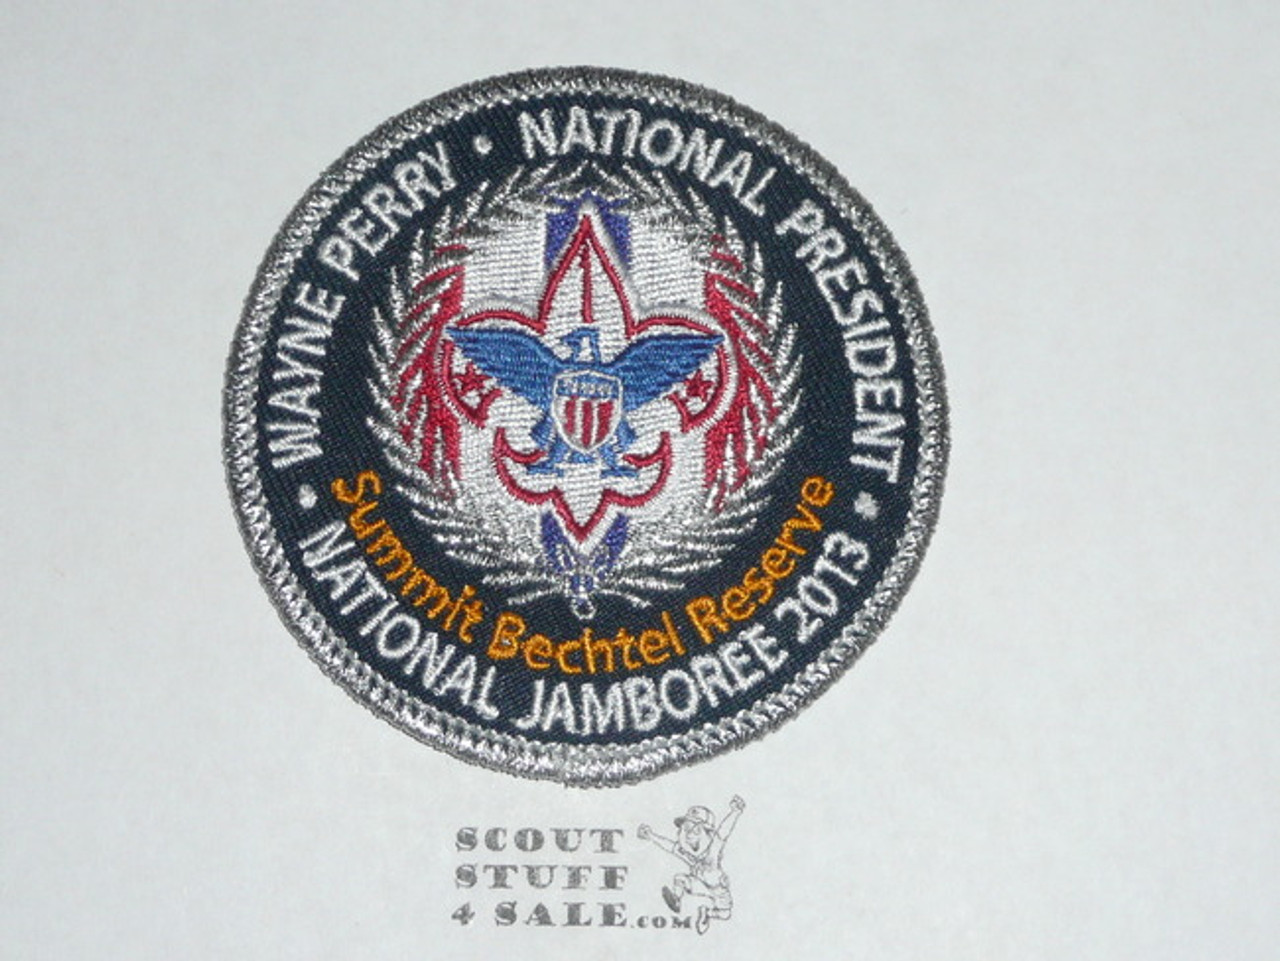 2013 National Jamboree Patch, Wayne Perry National President